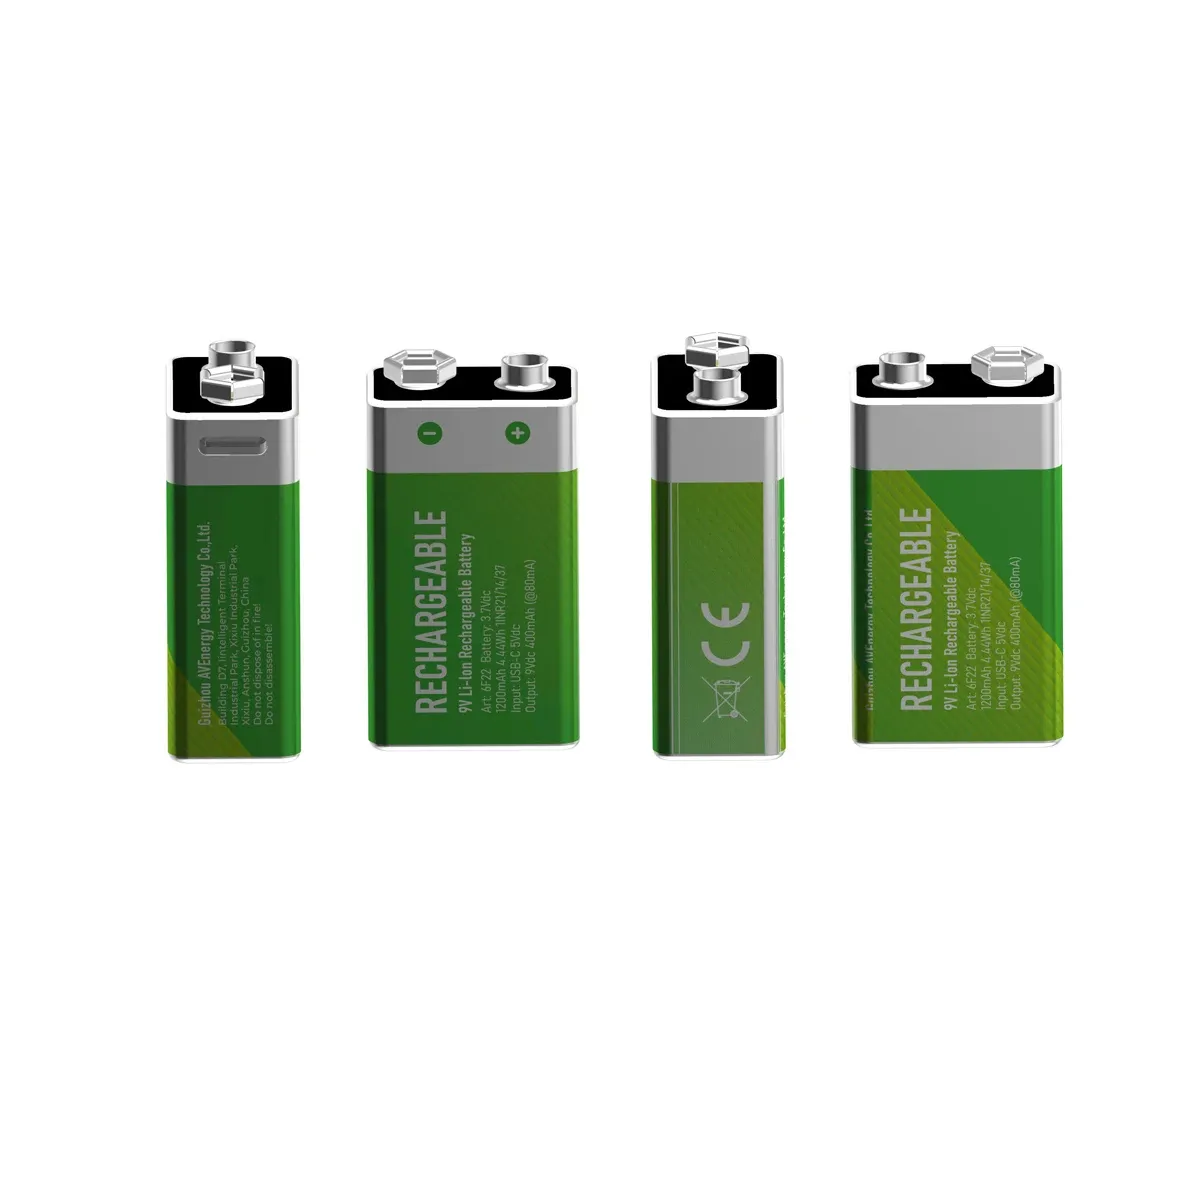 Şarj edilebilir 9v tip C Usb lityum iyon batarya 4500 mWh 6f2 2 Li-ion pil